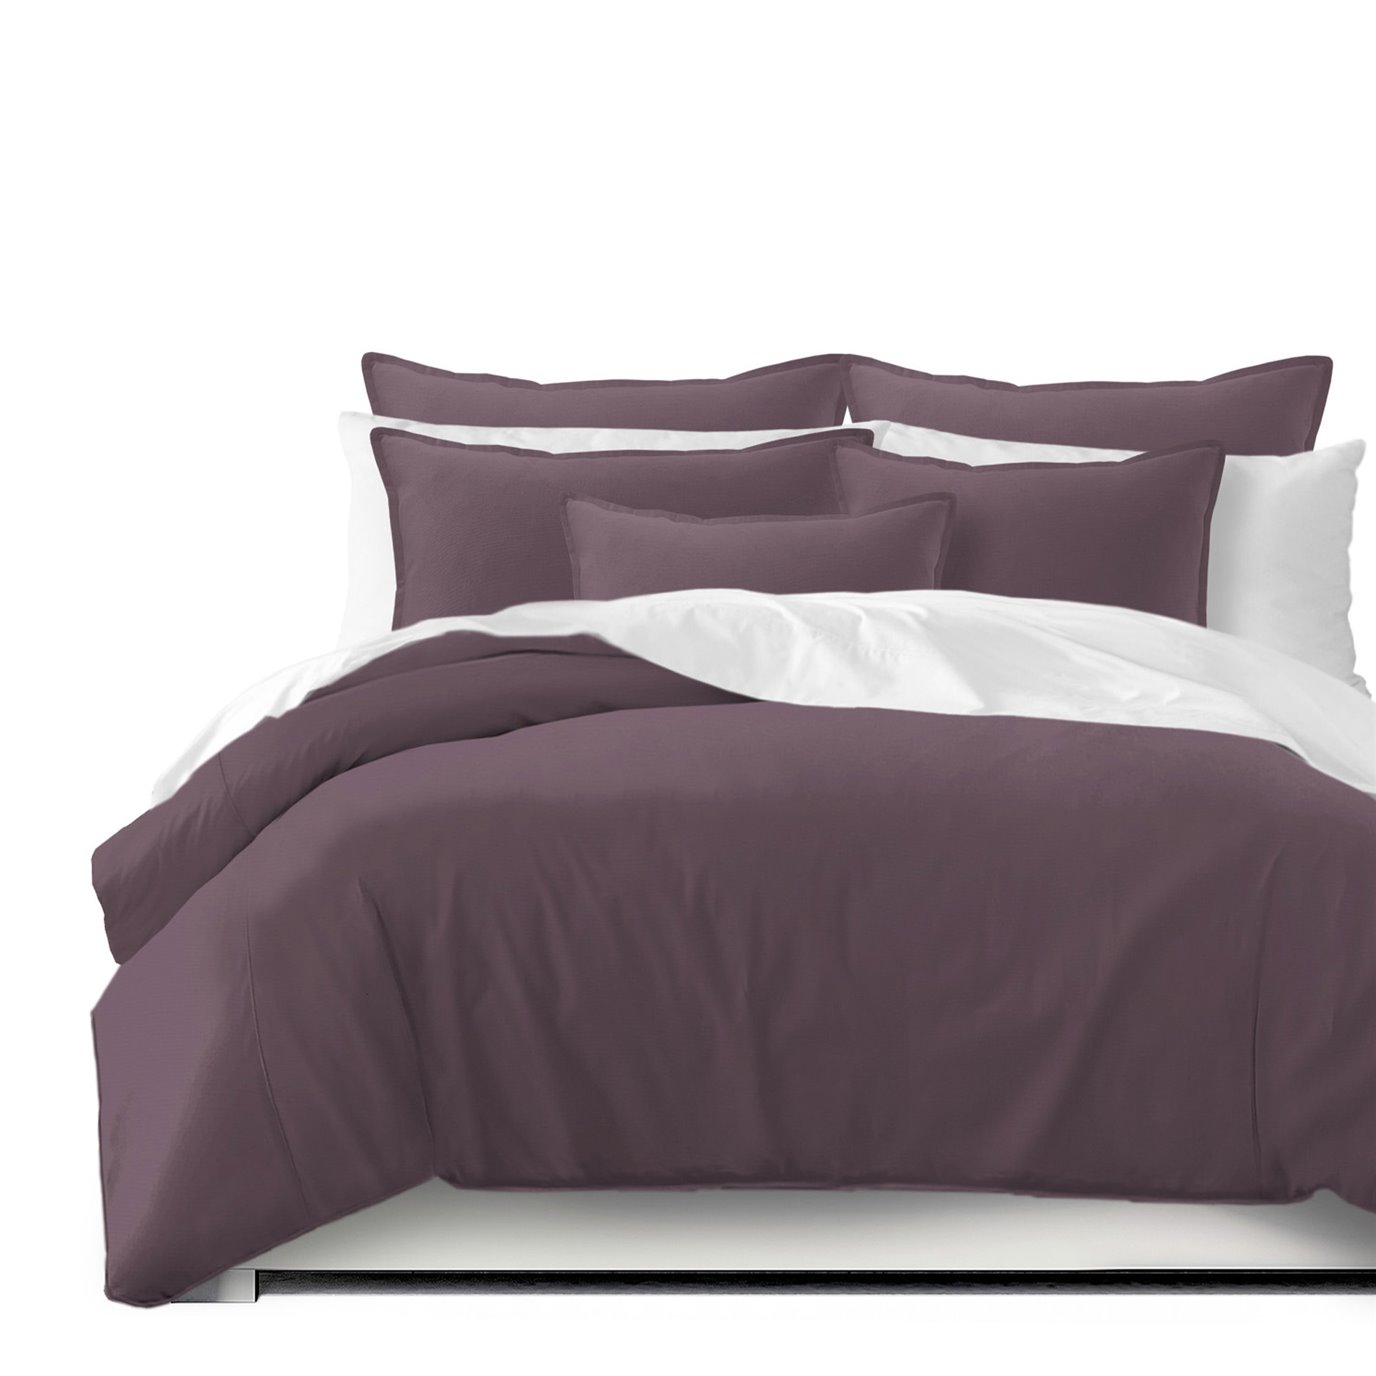 Braxton Purple Grape Comforter and Pillow Sham(s) Set - Size Full